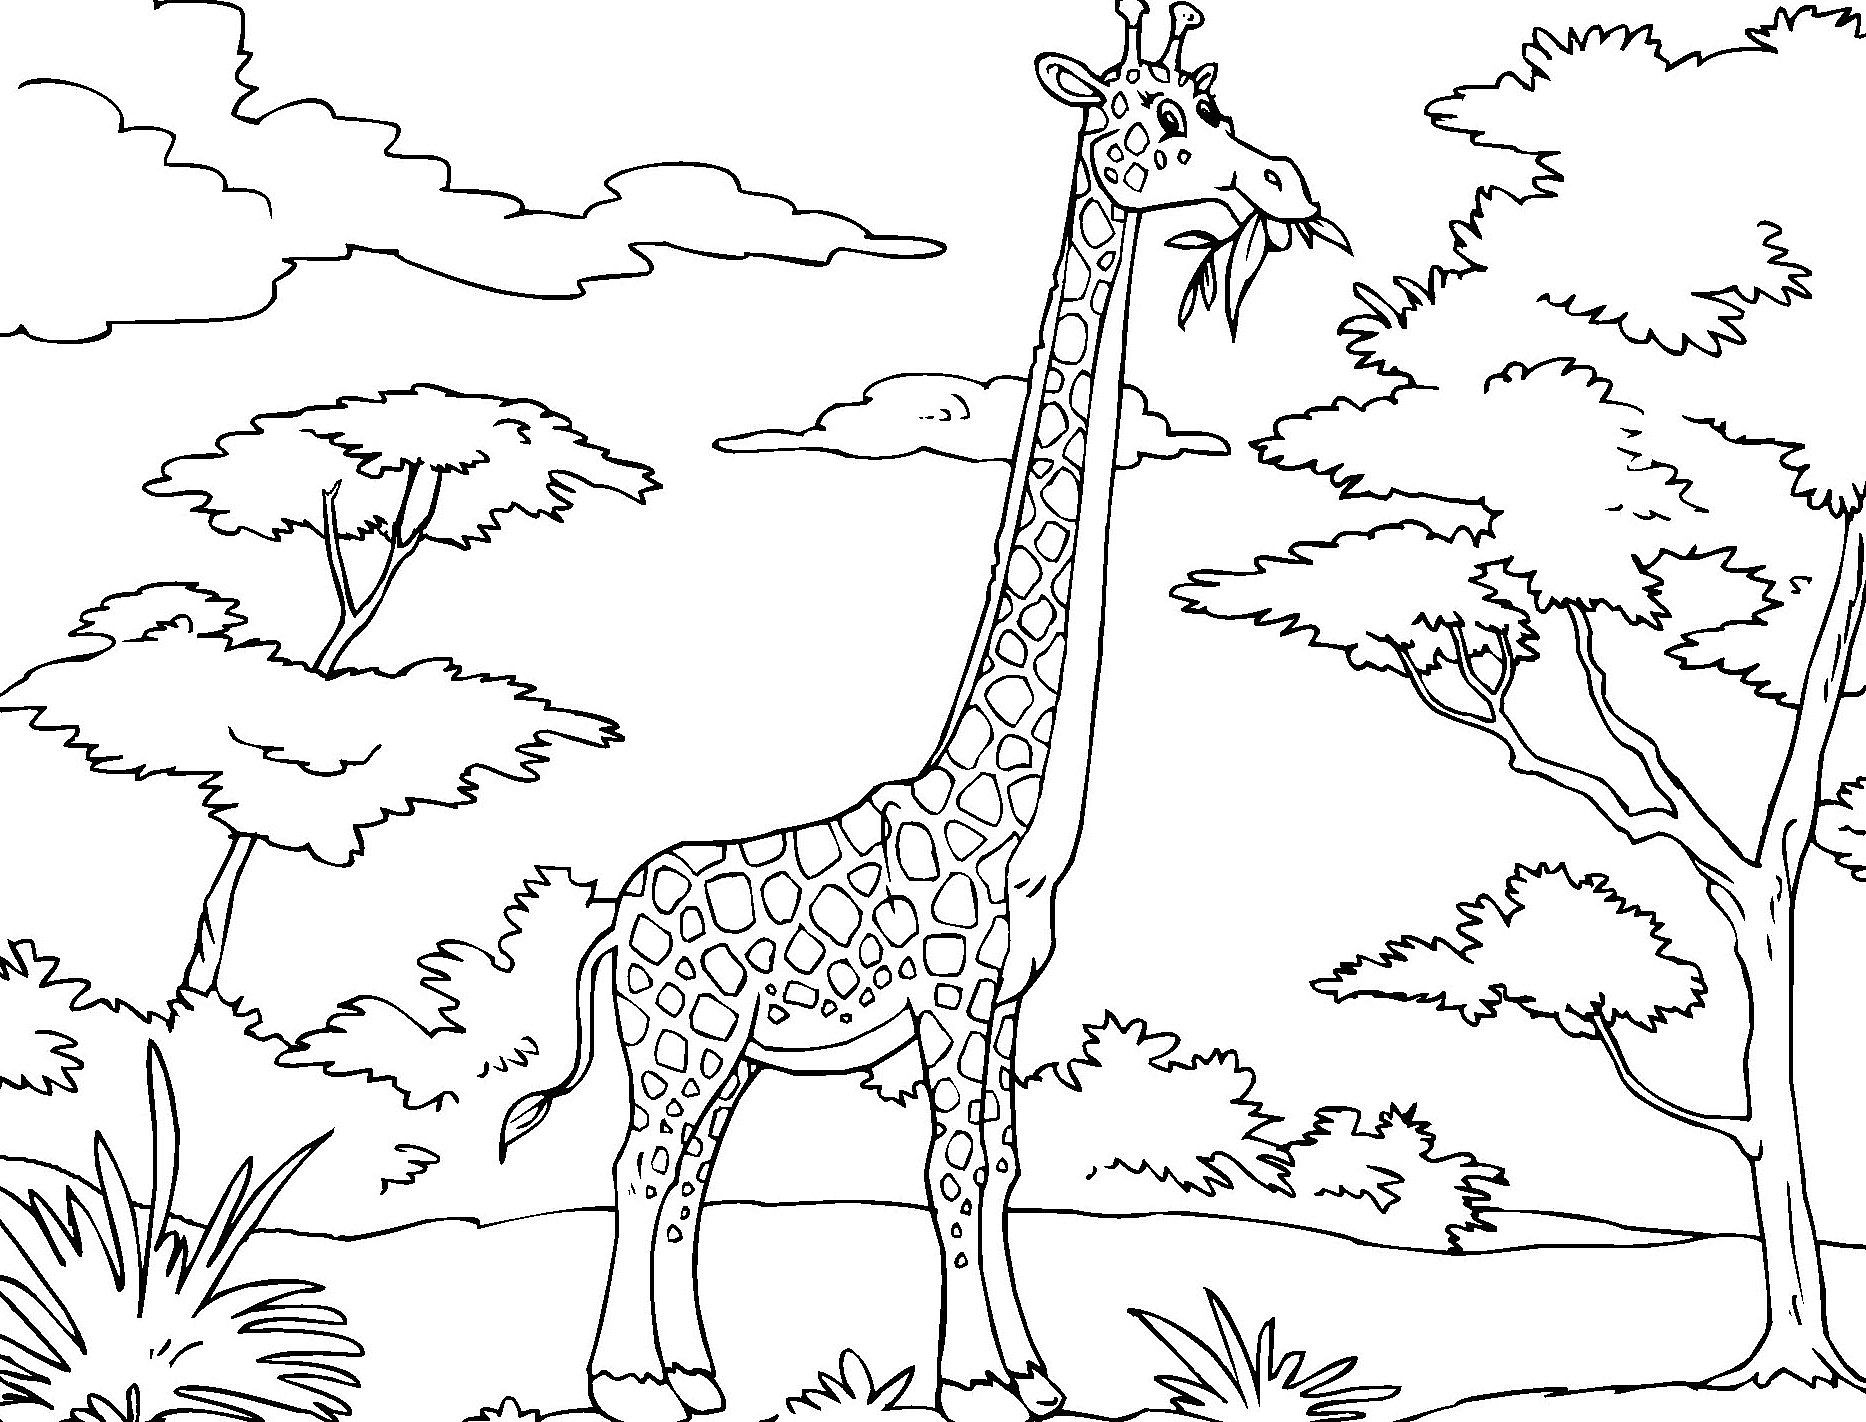 Cartoon Giraffe Coloring Pages at GetColorings.com | Free printable